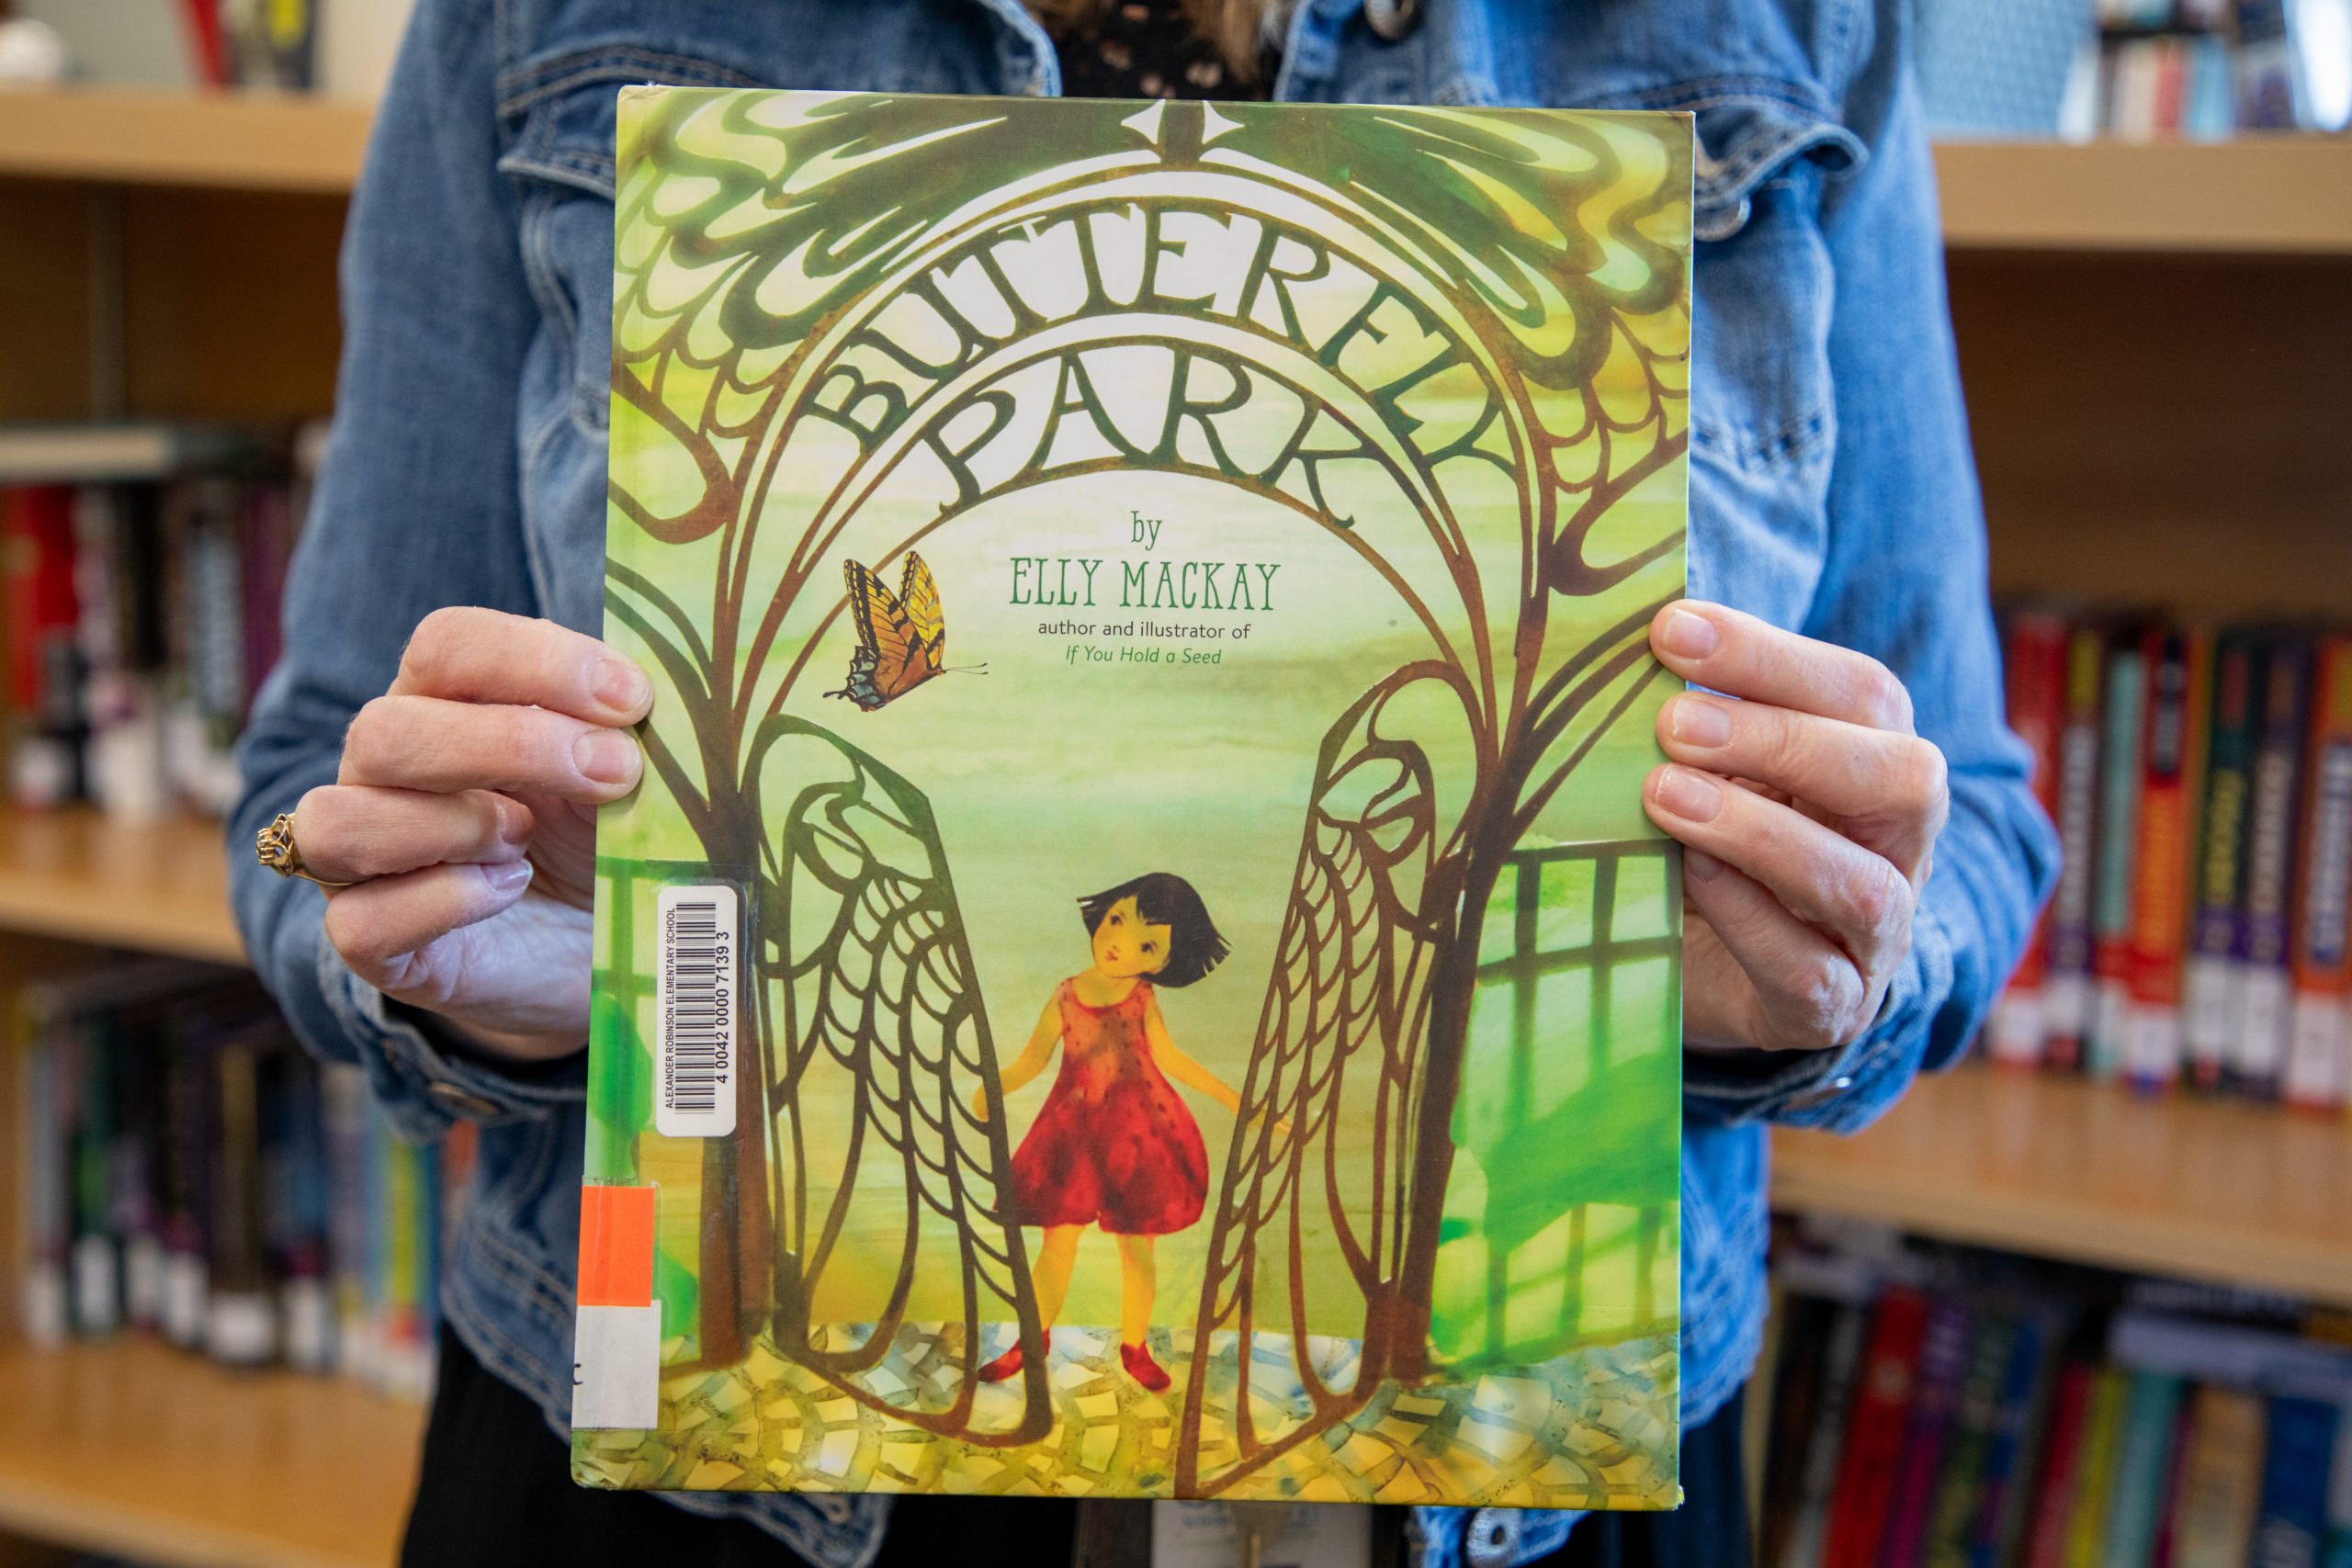 Alexander Robinson teacher-librarian Anita Neufeld holds up "Butterfly Park" by Elly MacKay.